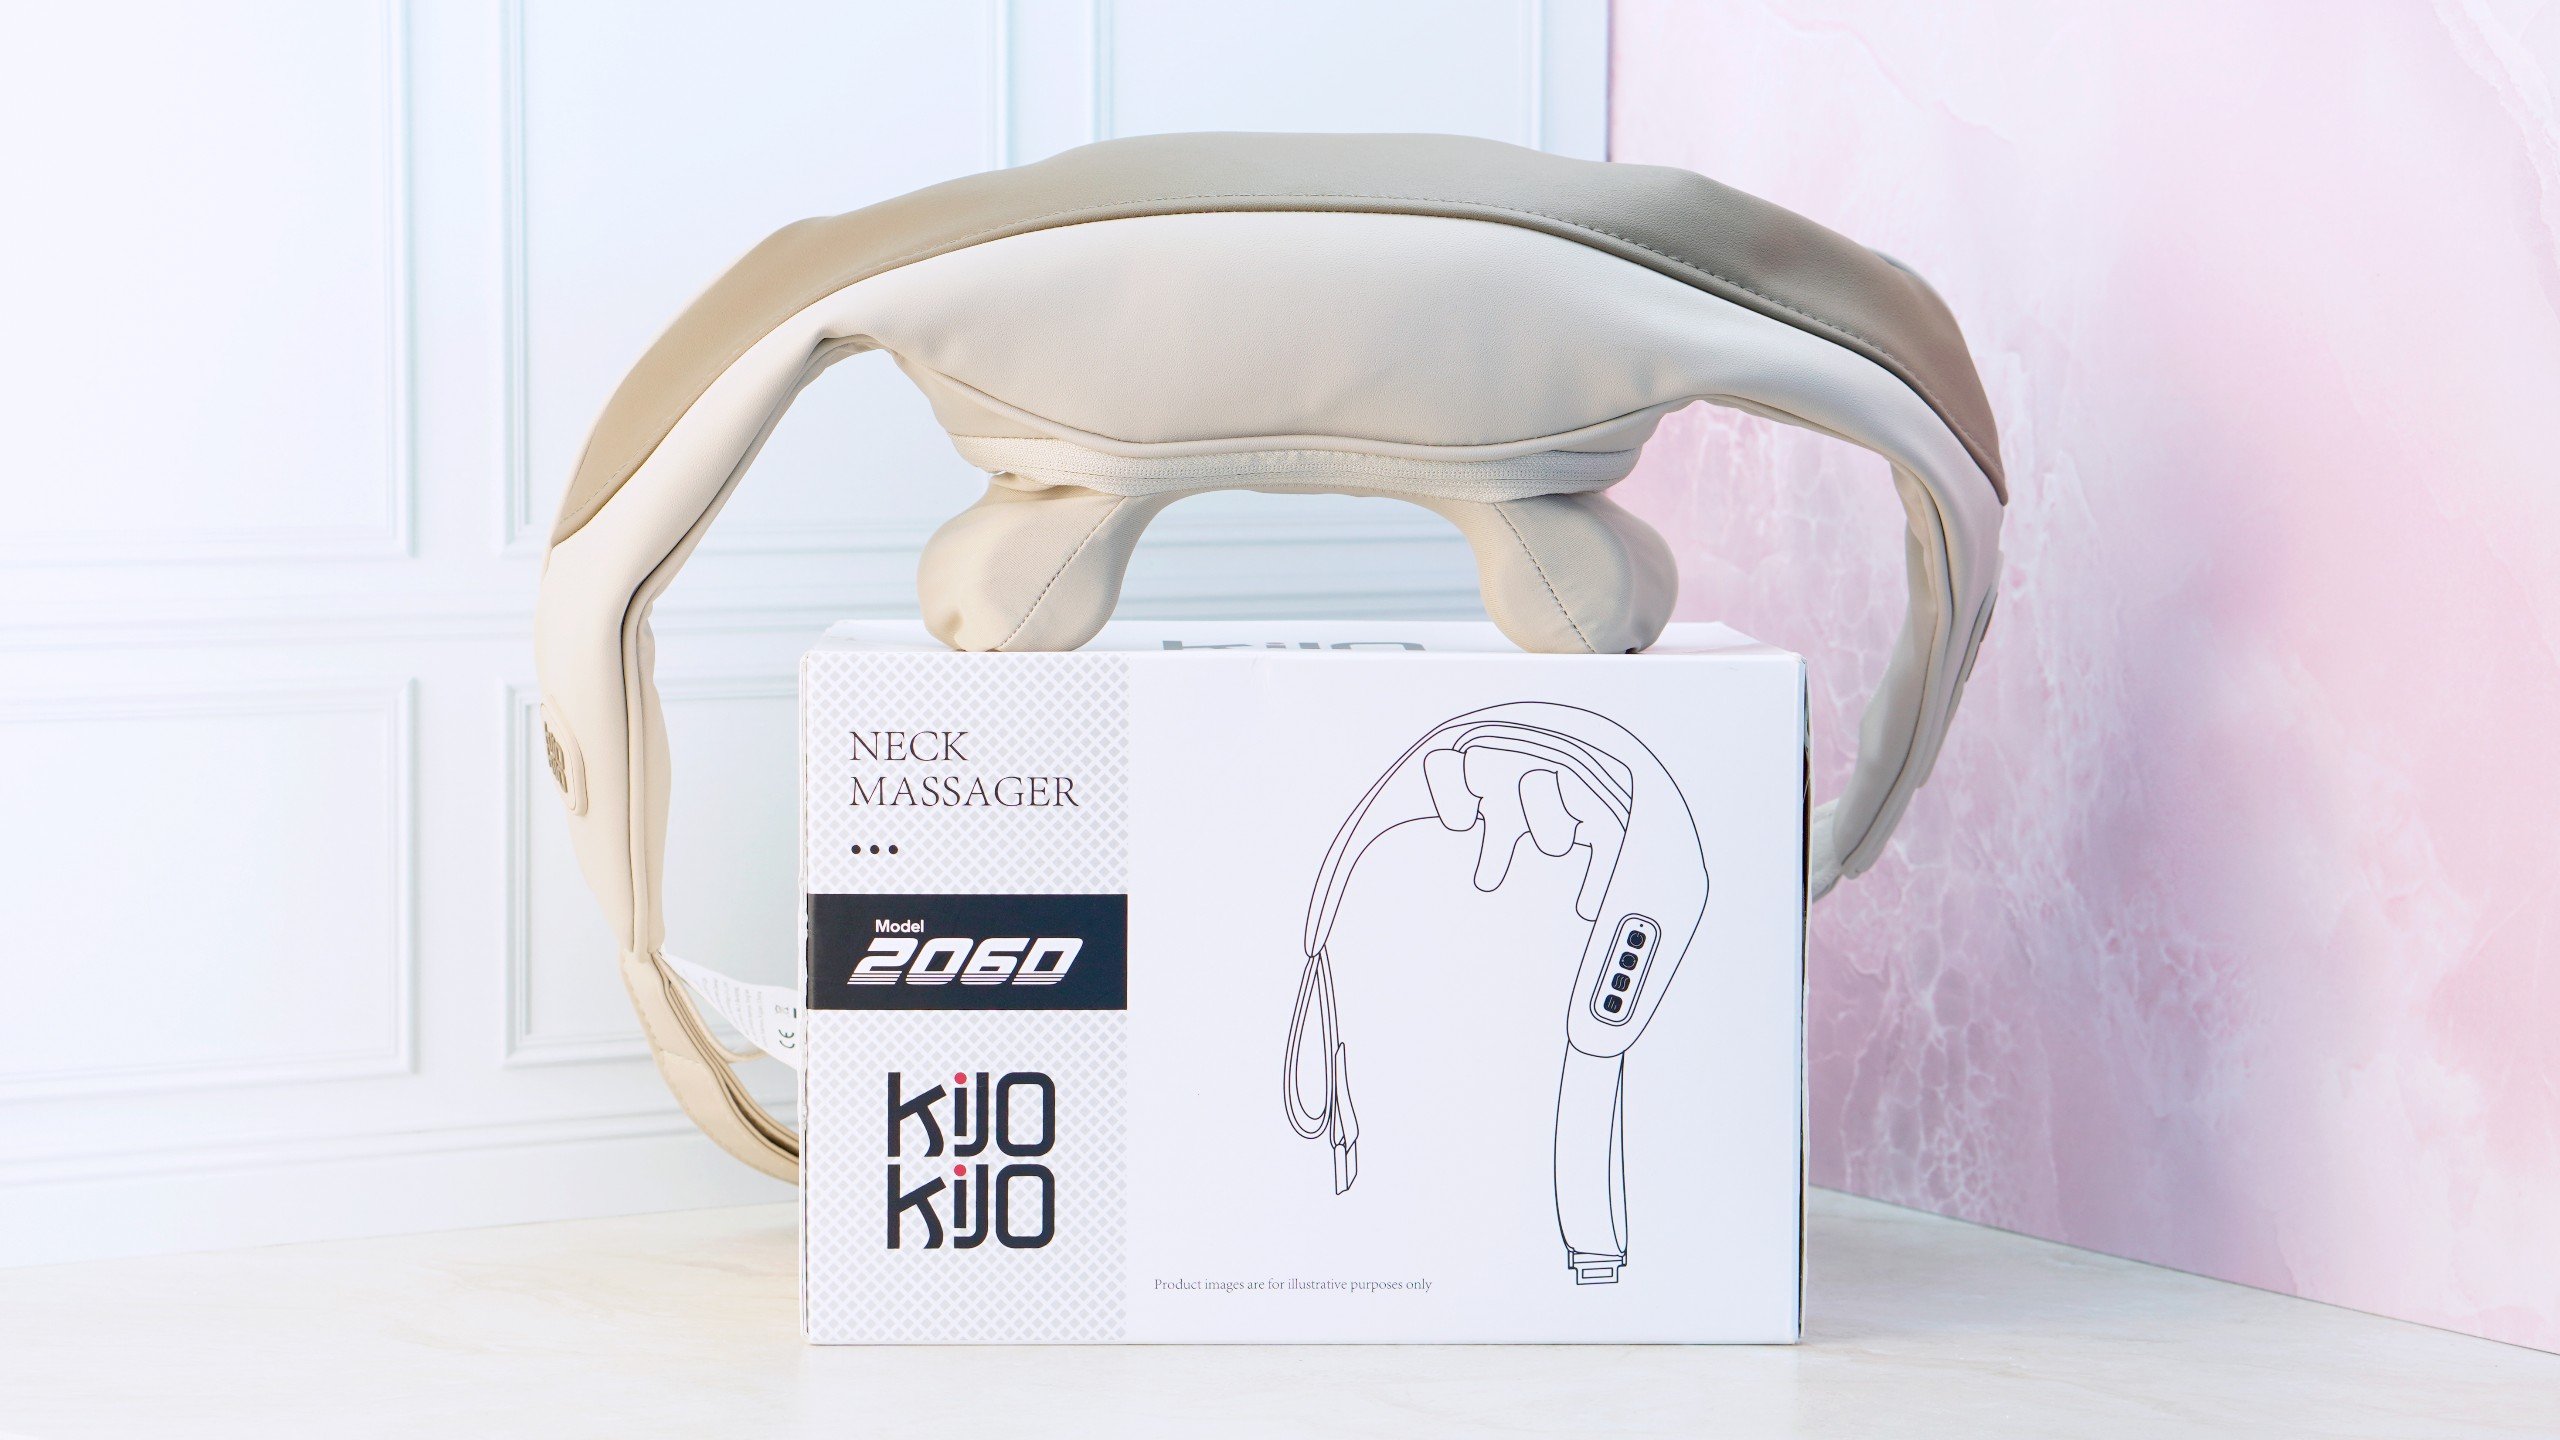 Máy massage cổ vai gáy cao cấp Kijo Kijo 206D